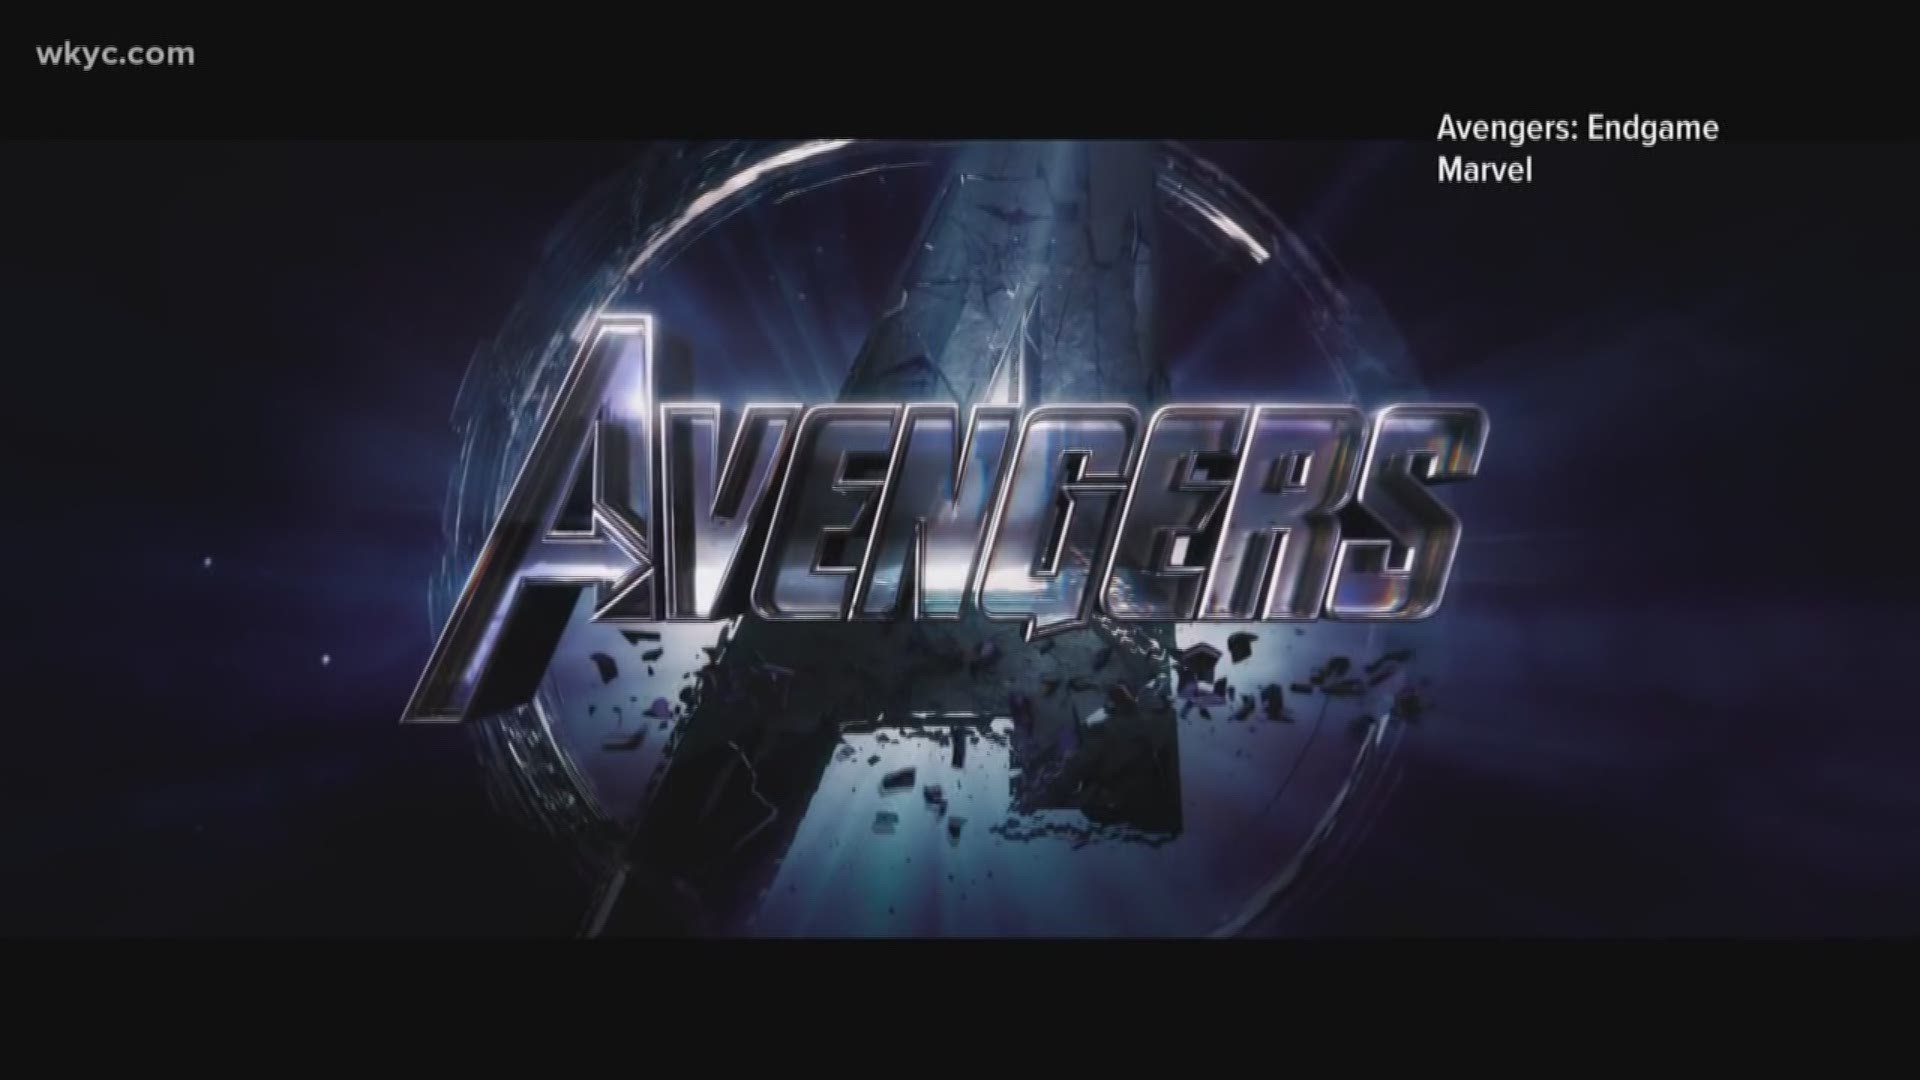 Avengers:endgame opens tomorrow